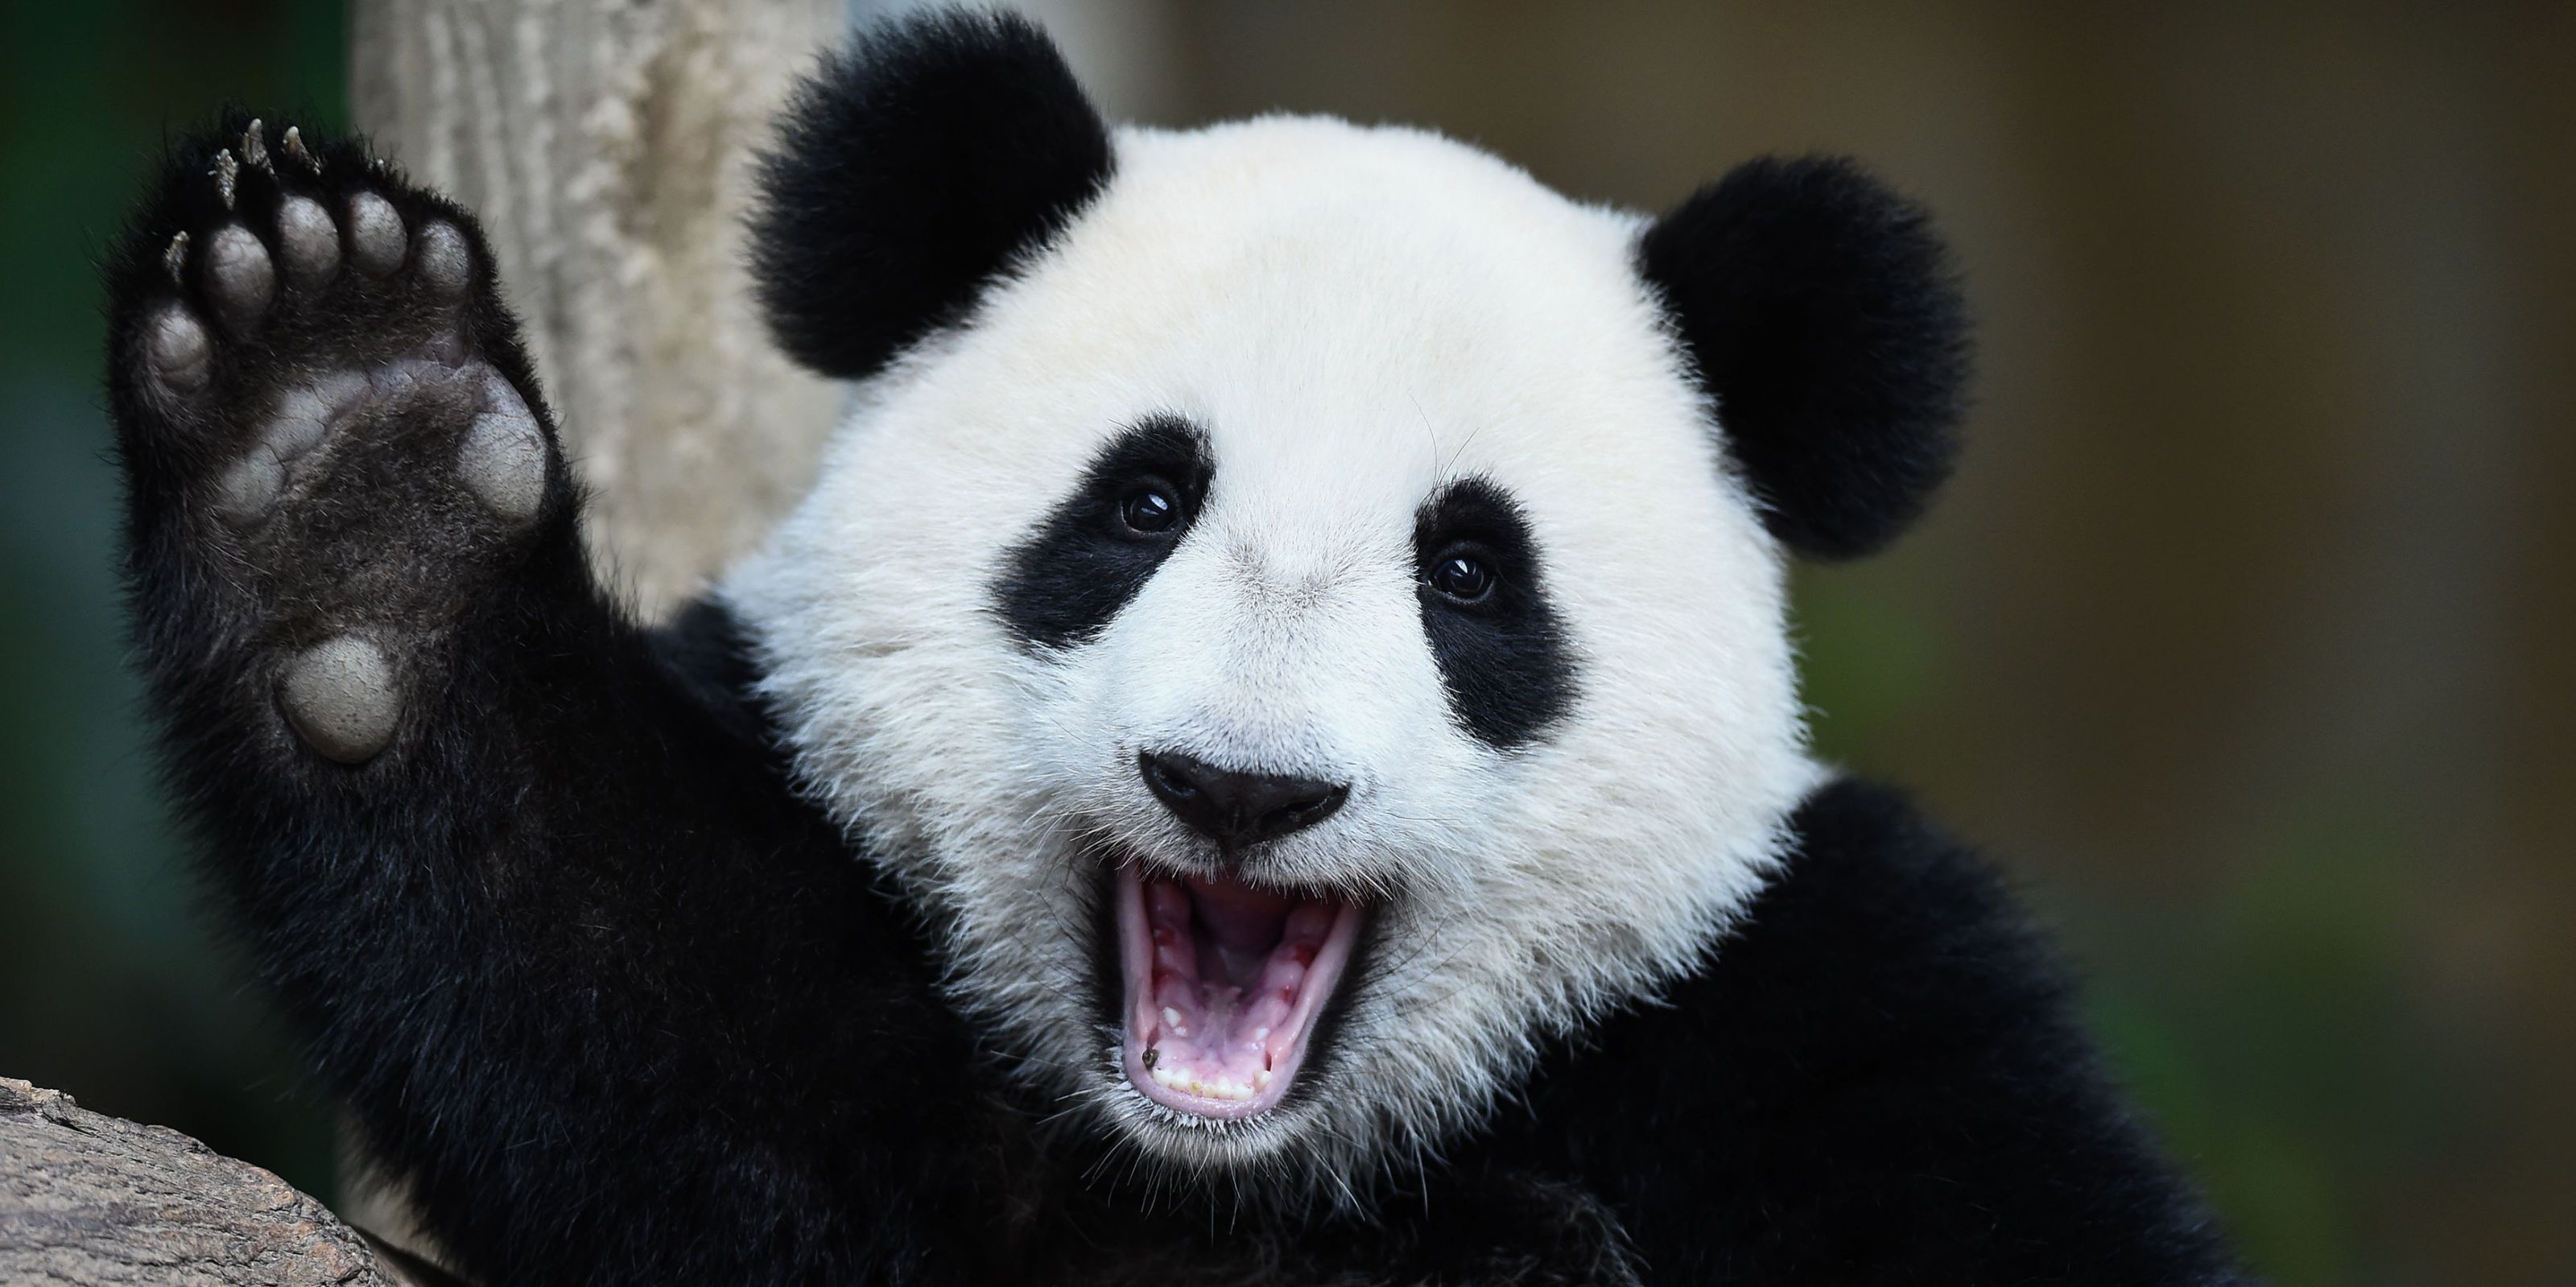 Introduction to Data Analysis Using Pandas